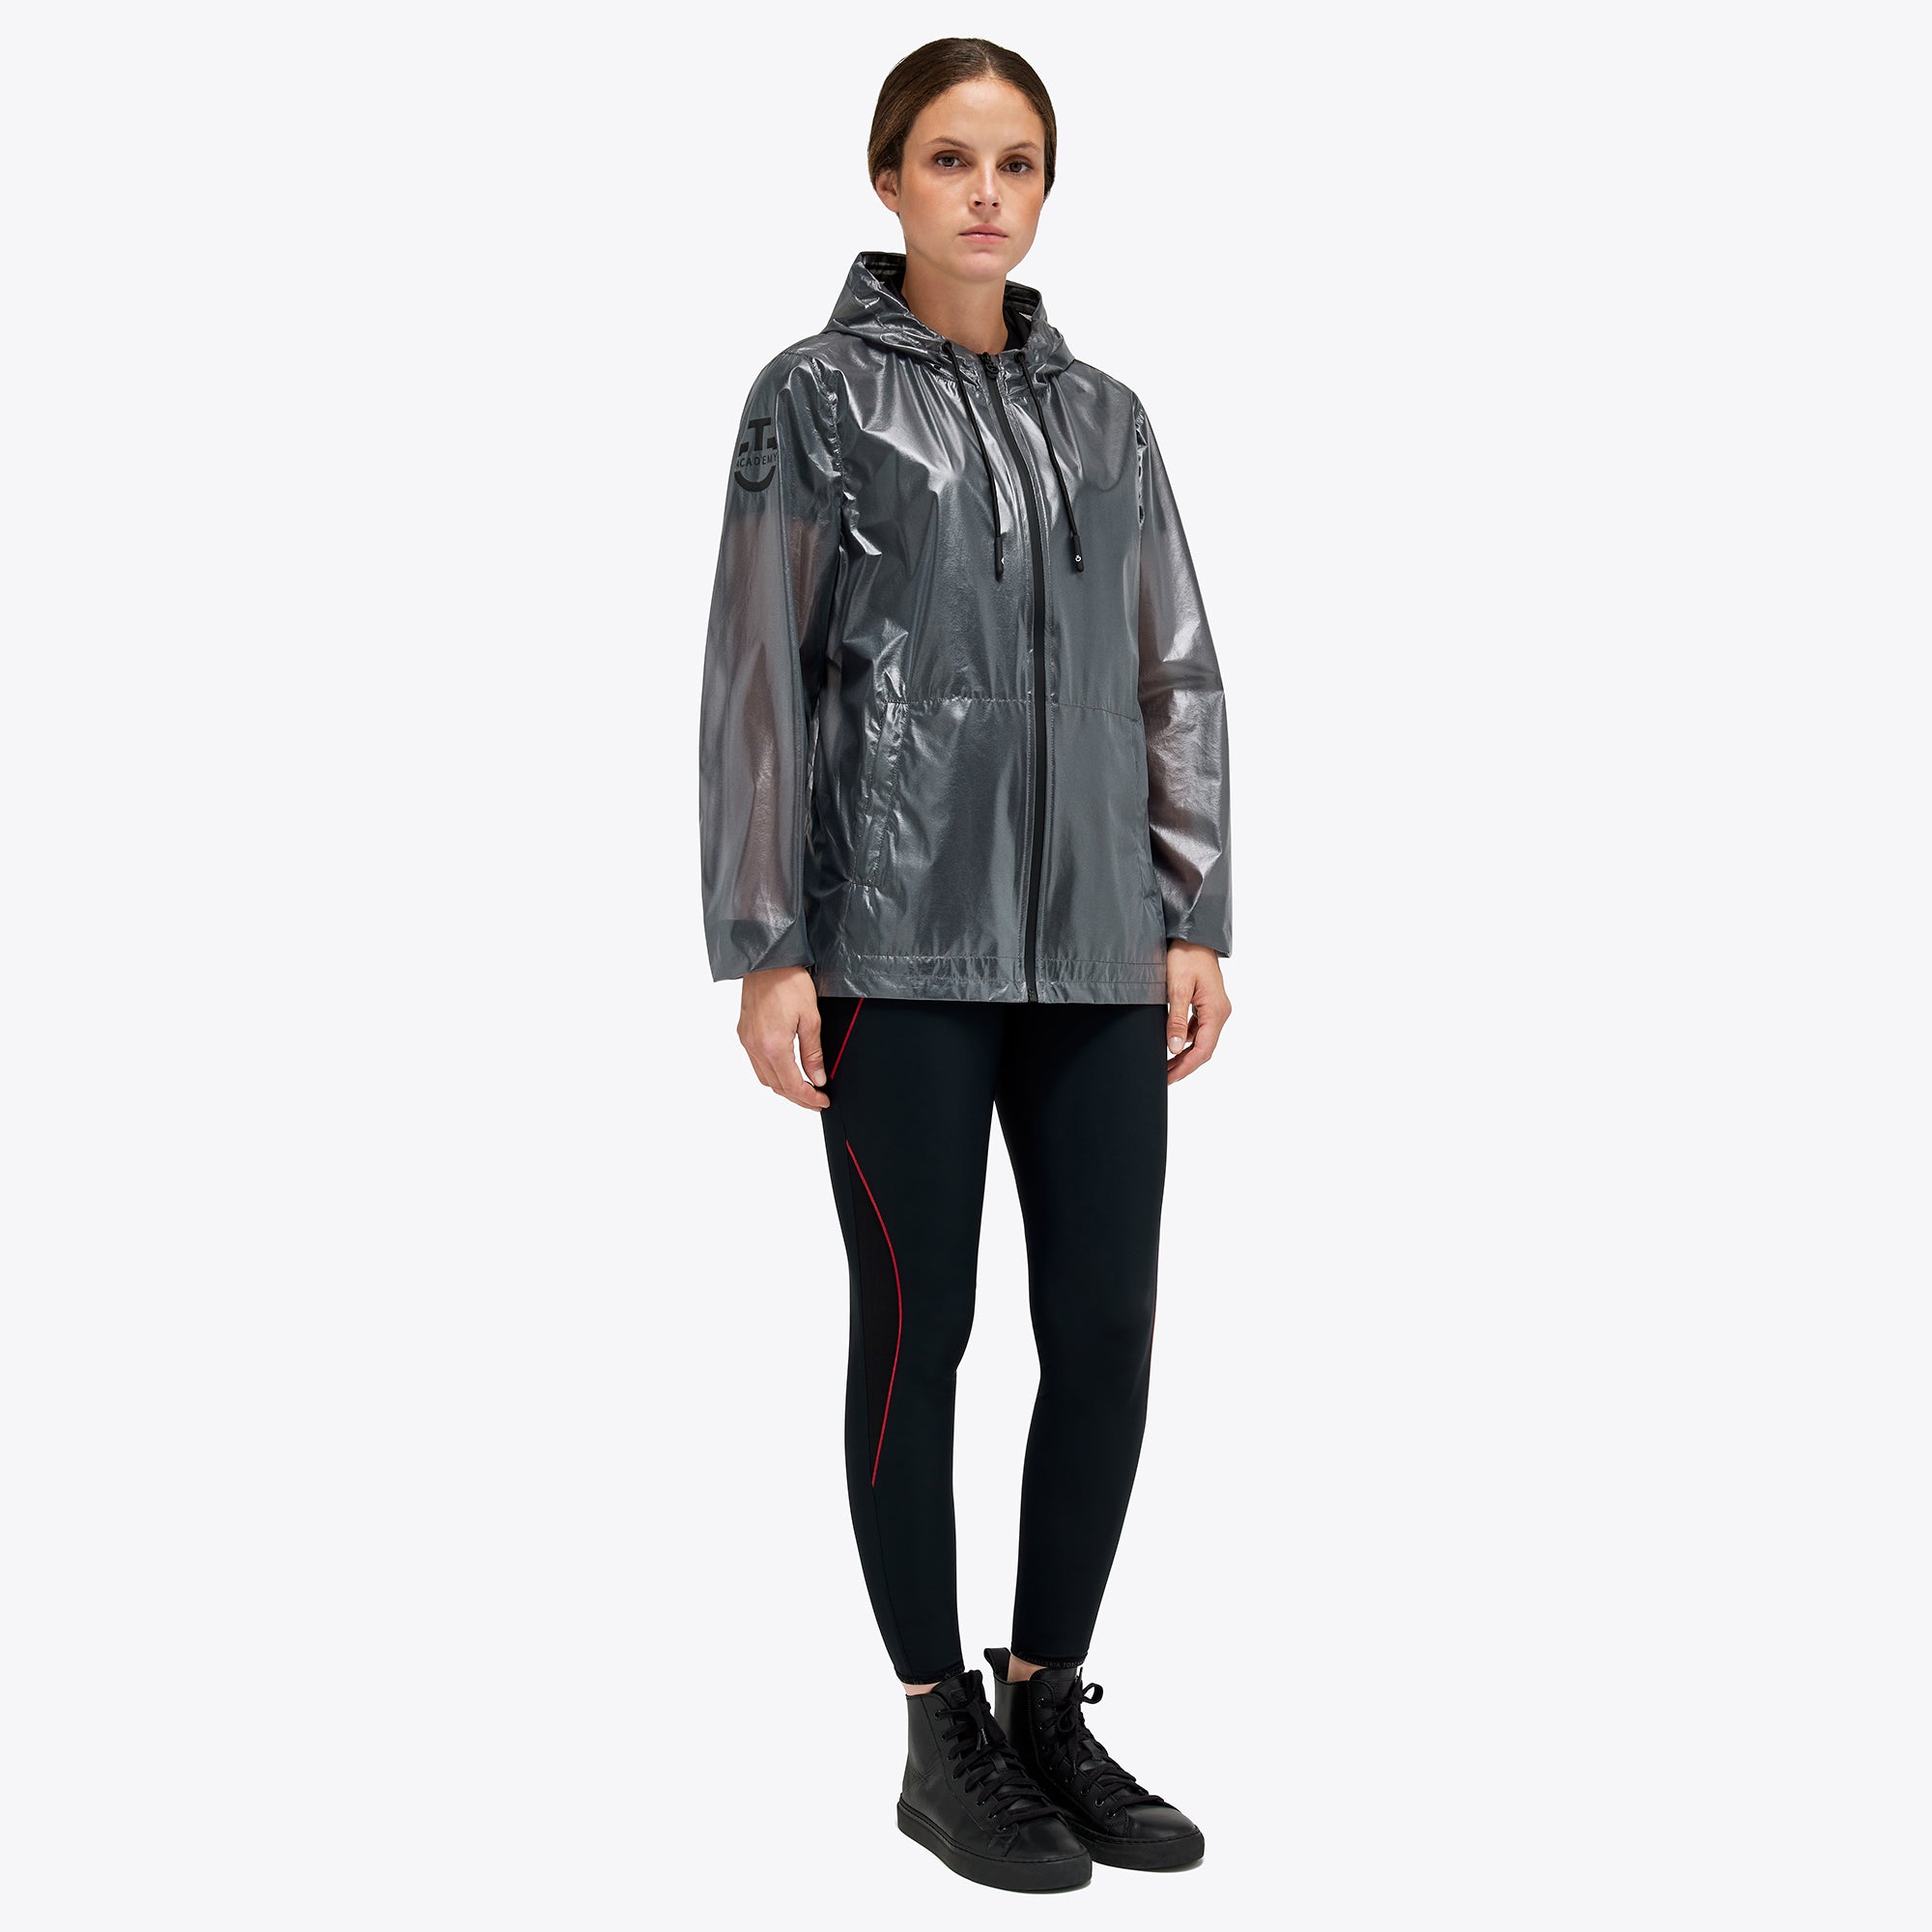 CT Academy women's rain jacket